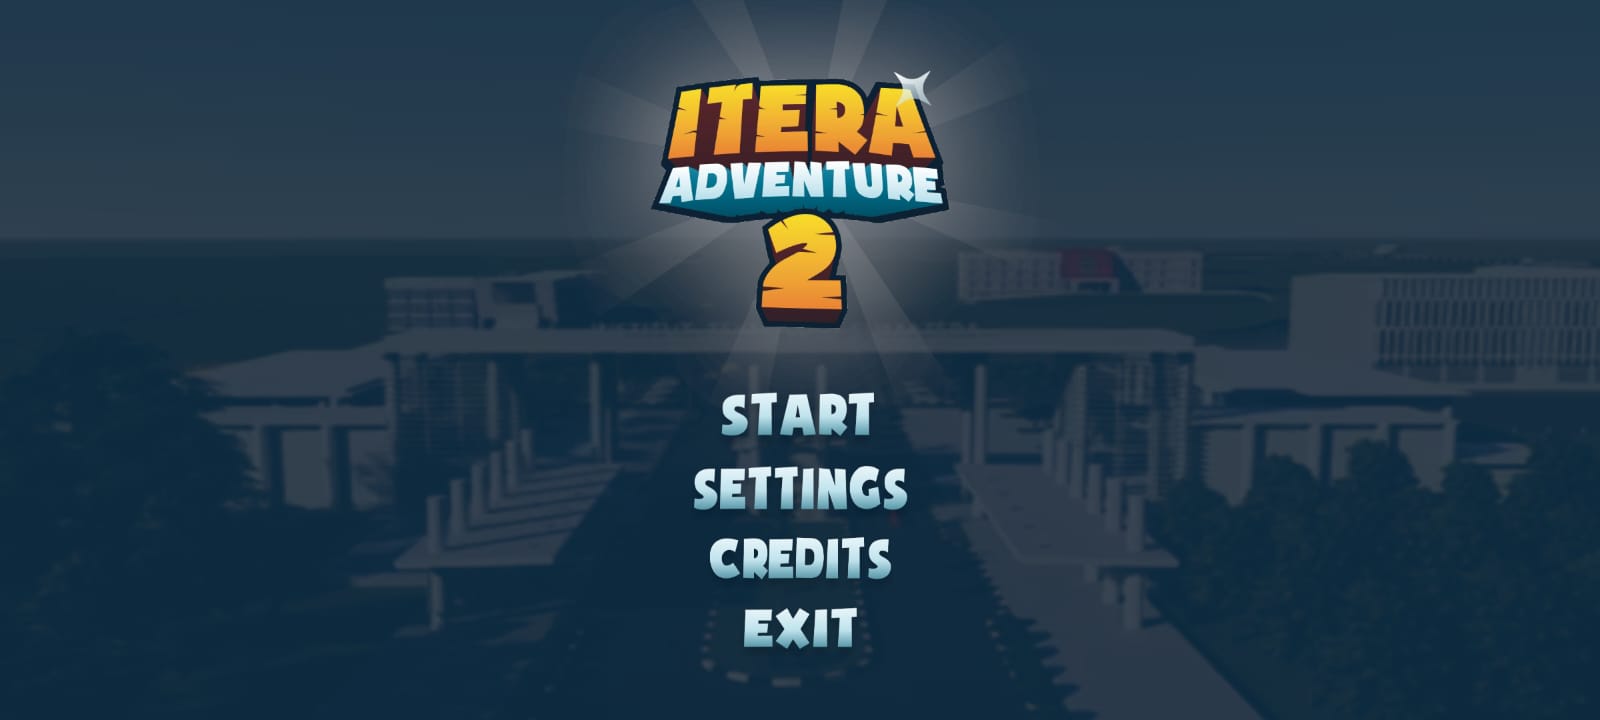 ITERA Adventure 2